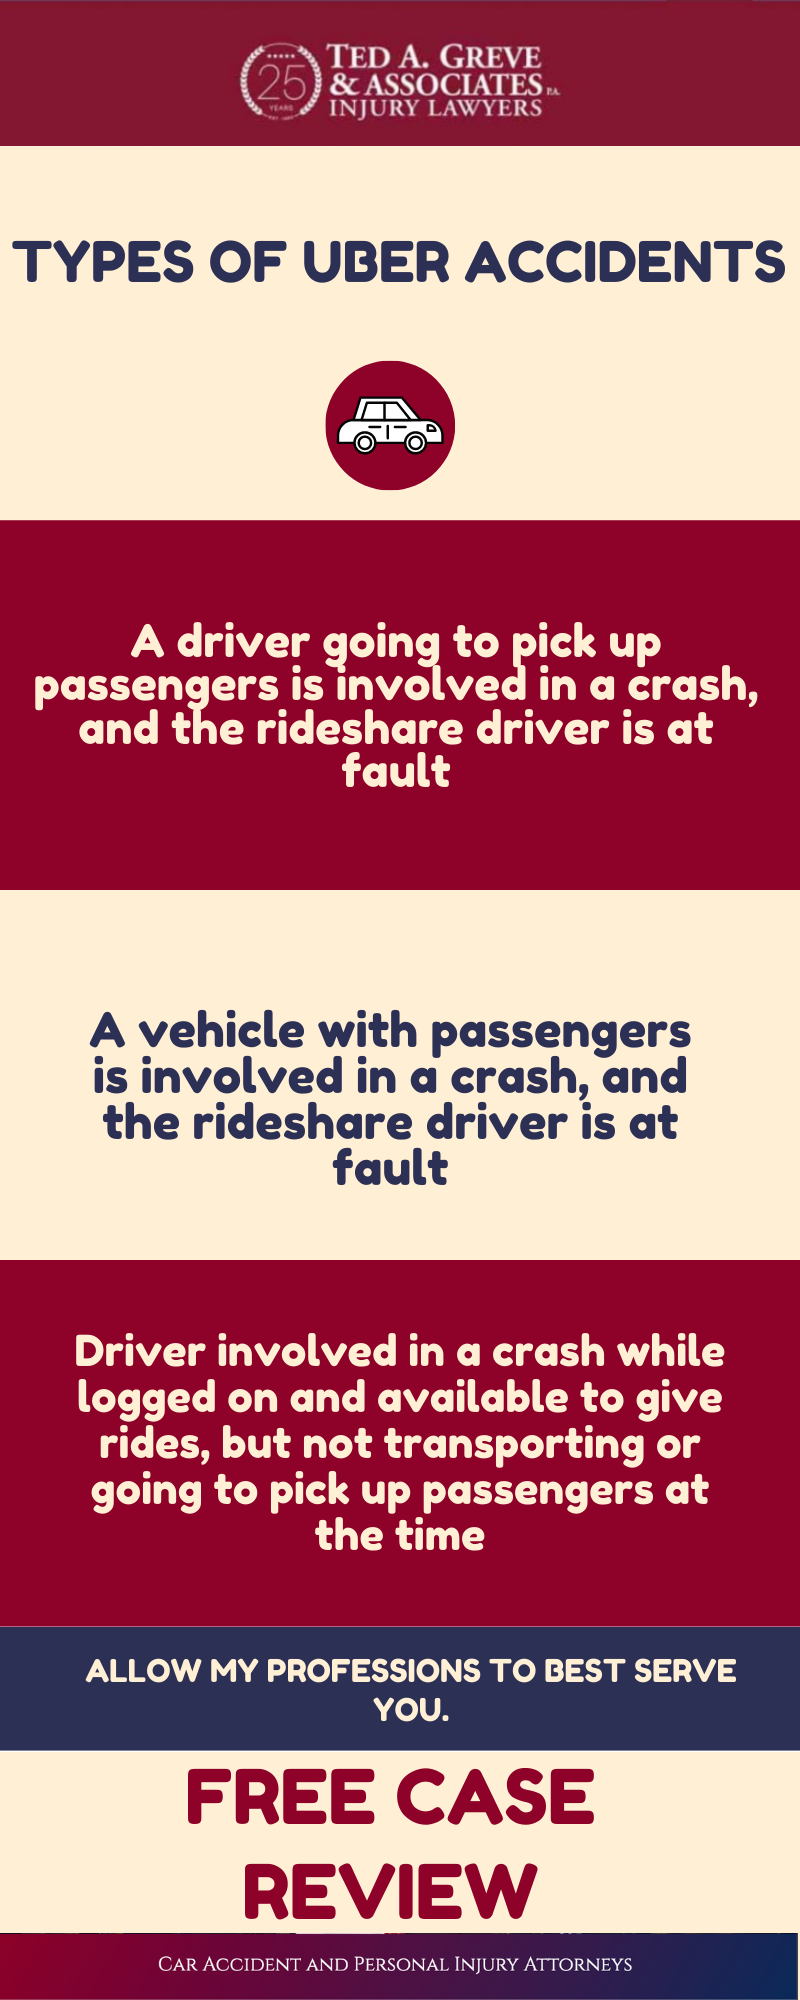 Ted Greve Atlanta Uber Accident Infographic